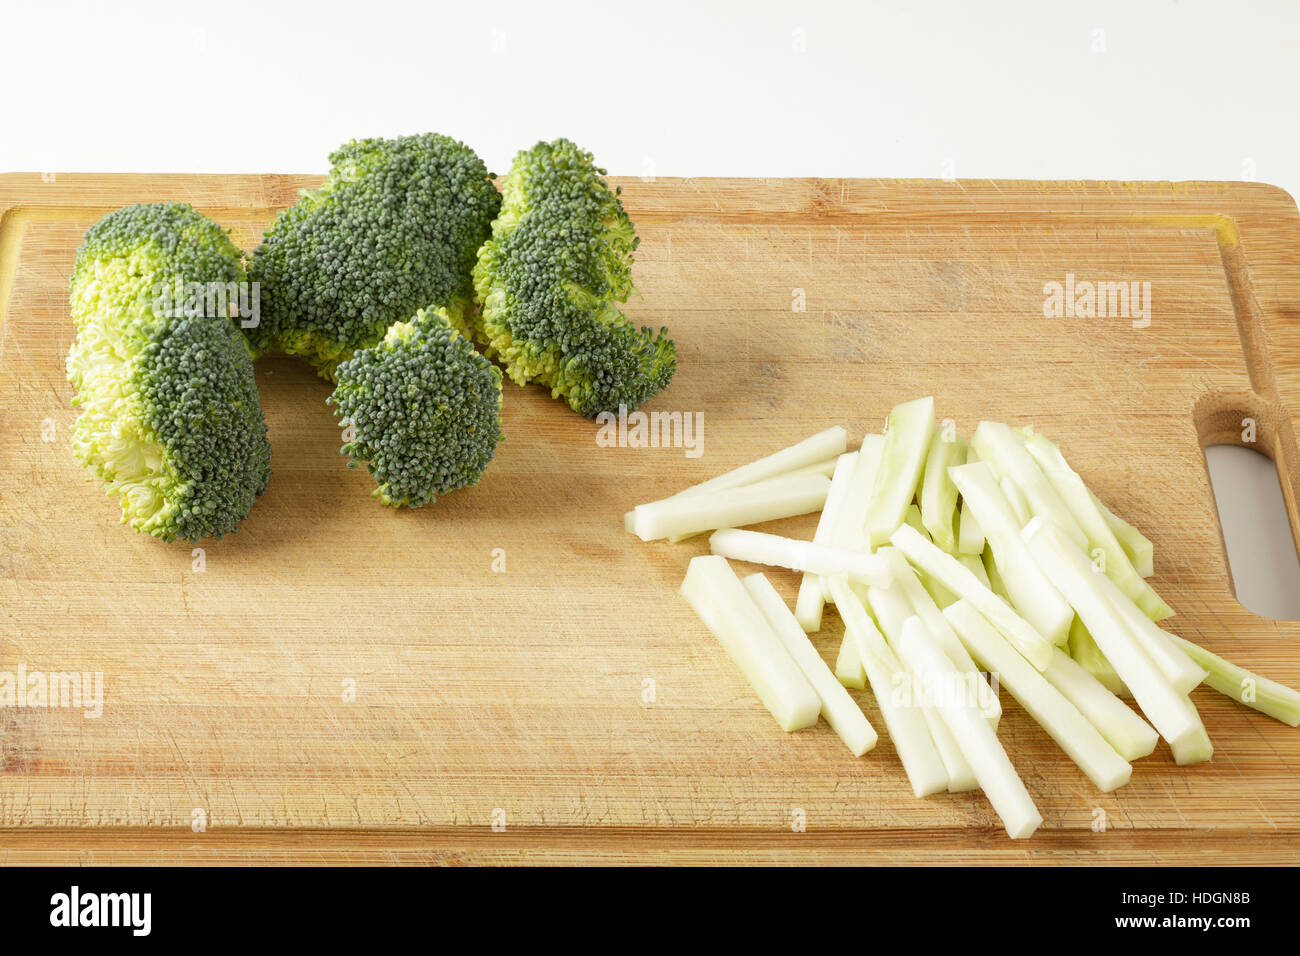 broccoli and stalk - preparing the broccoli stalk for cooking Stock Photo